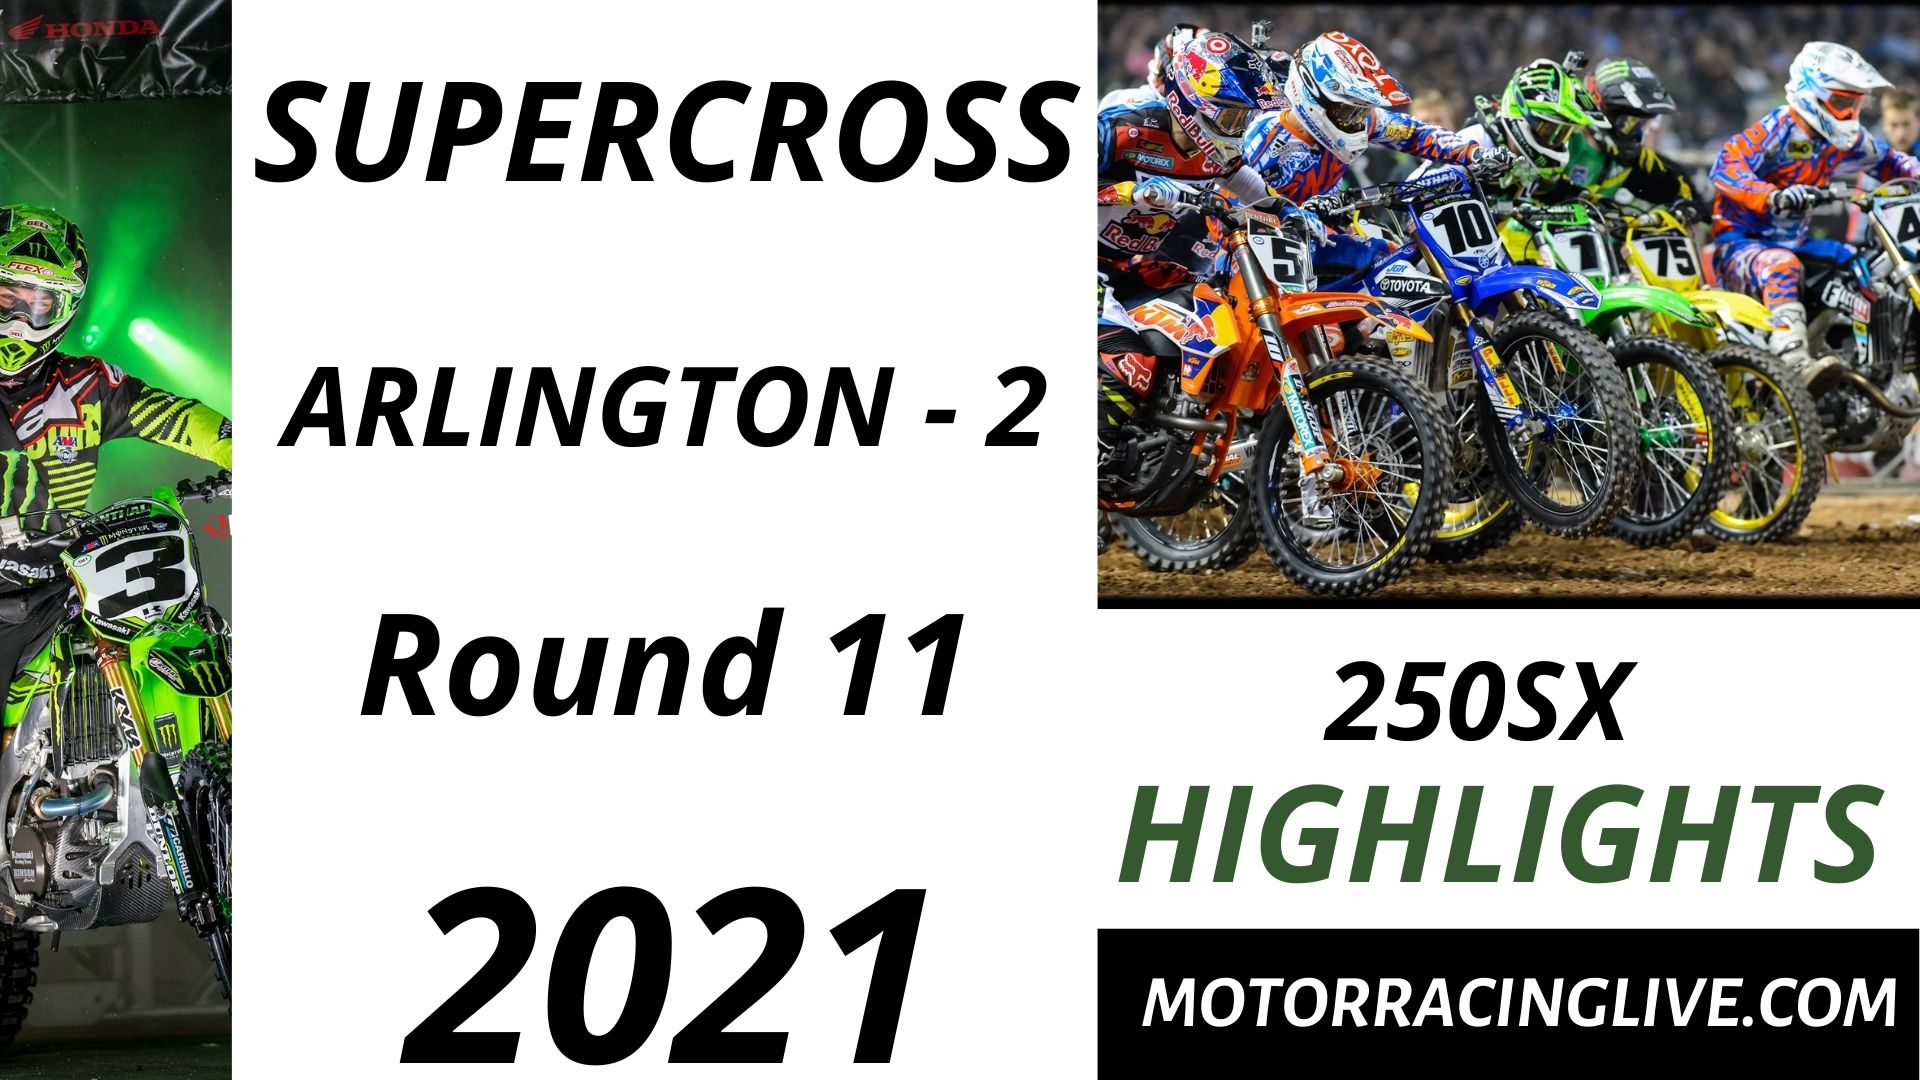 Arlington 2 Round 11 250SX Highlights 2021 Supercross